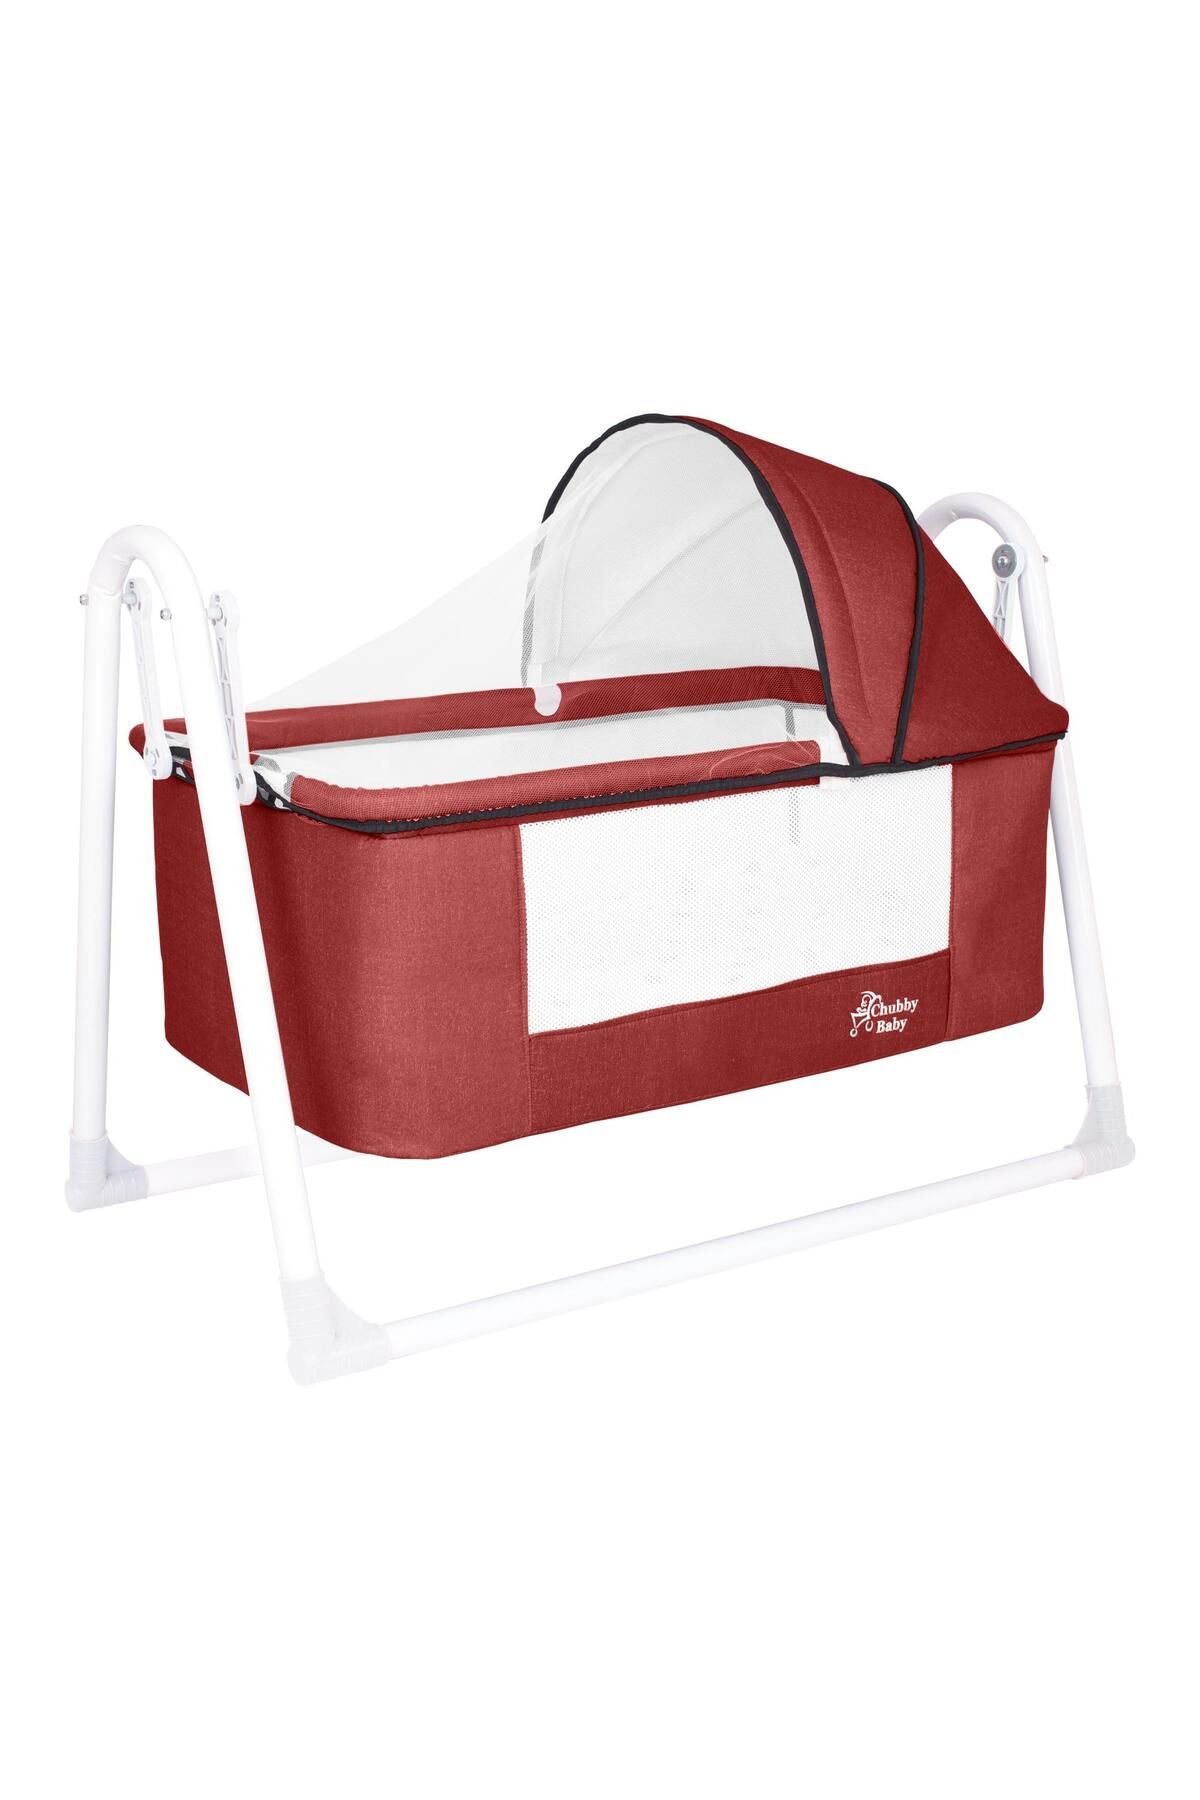 CHUBBY BABY First Class Portatif-Keten Tenteli Sepet Beşik Silinebilir Kumaş Kırmızı